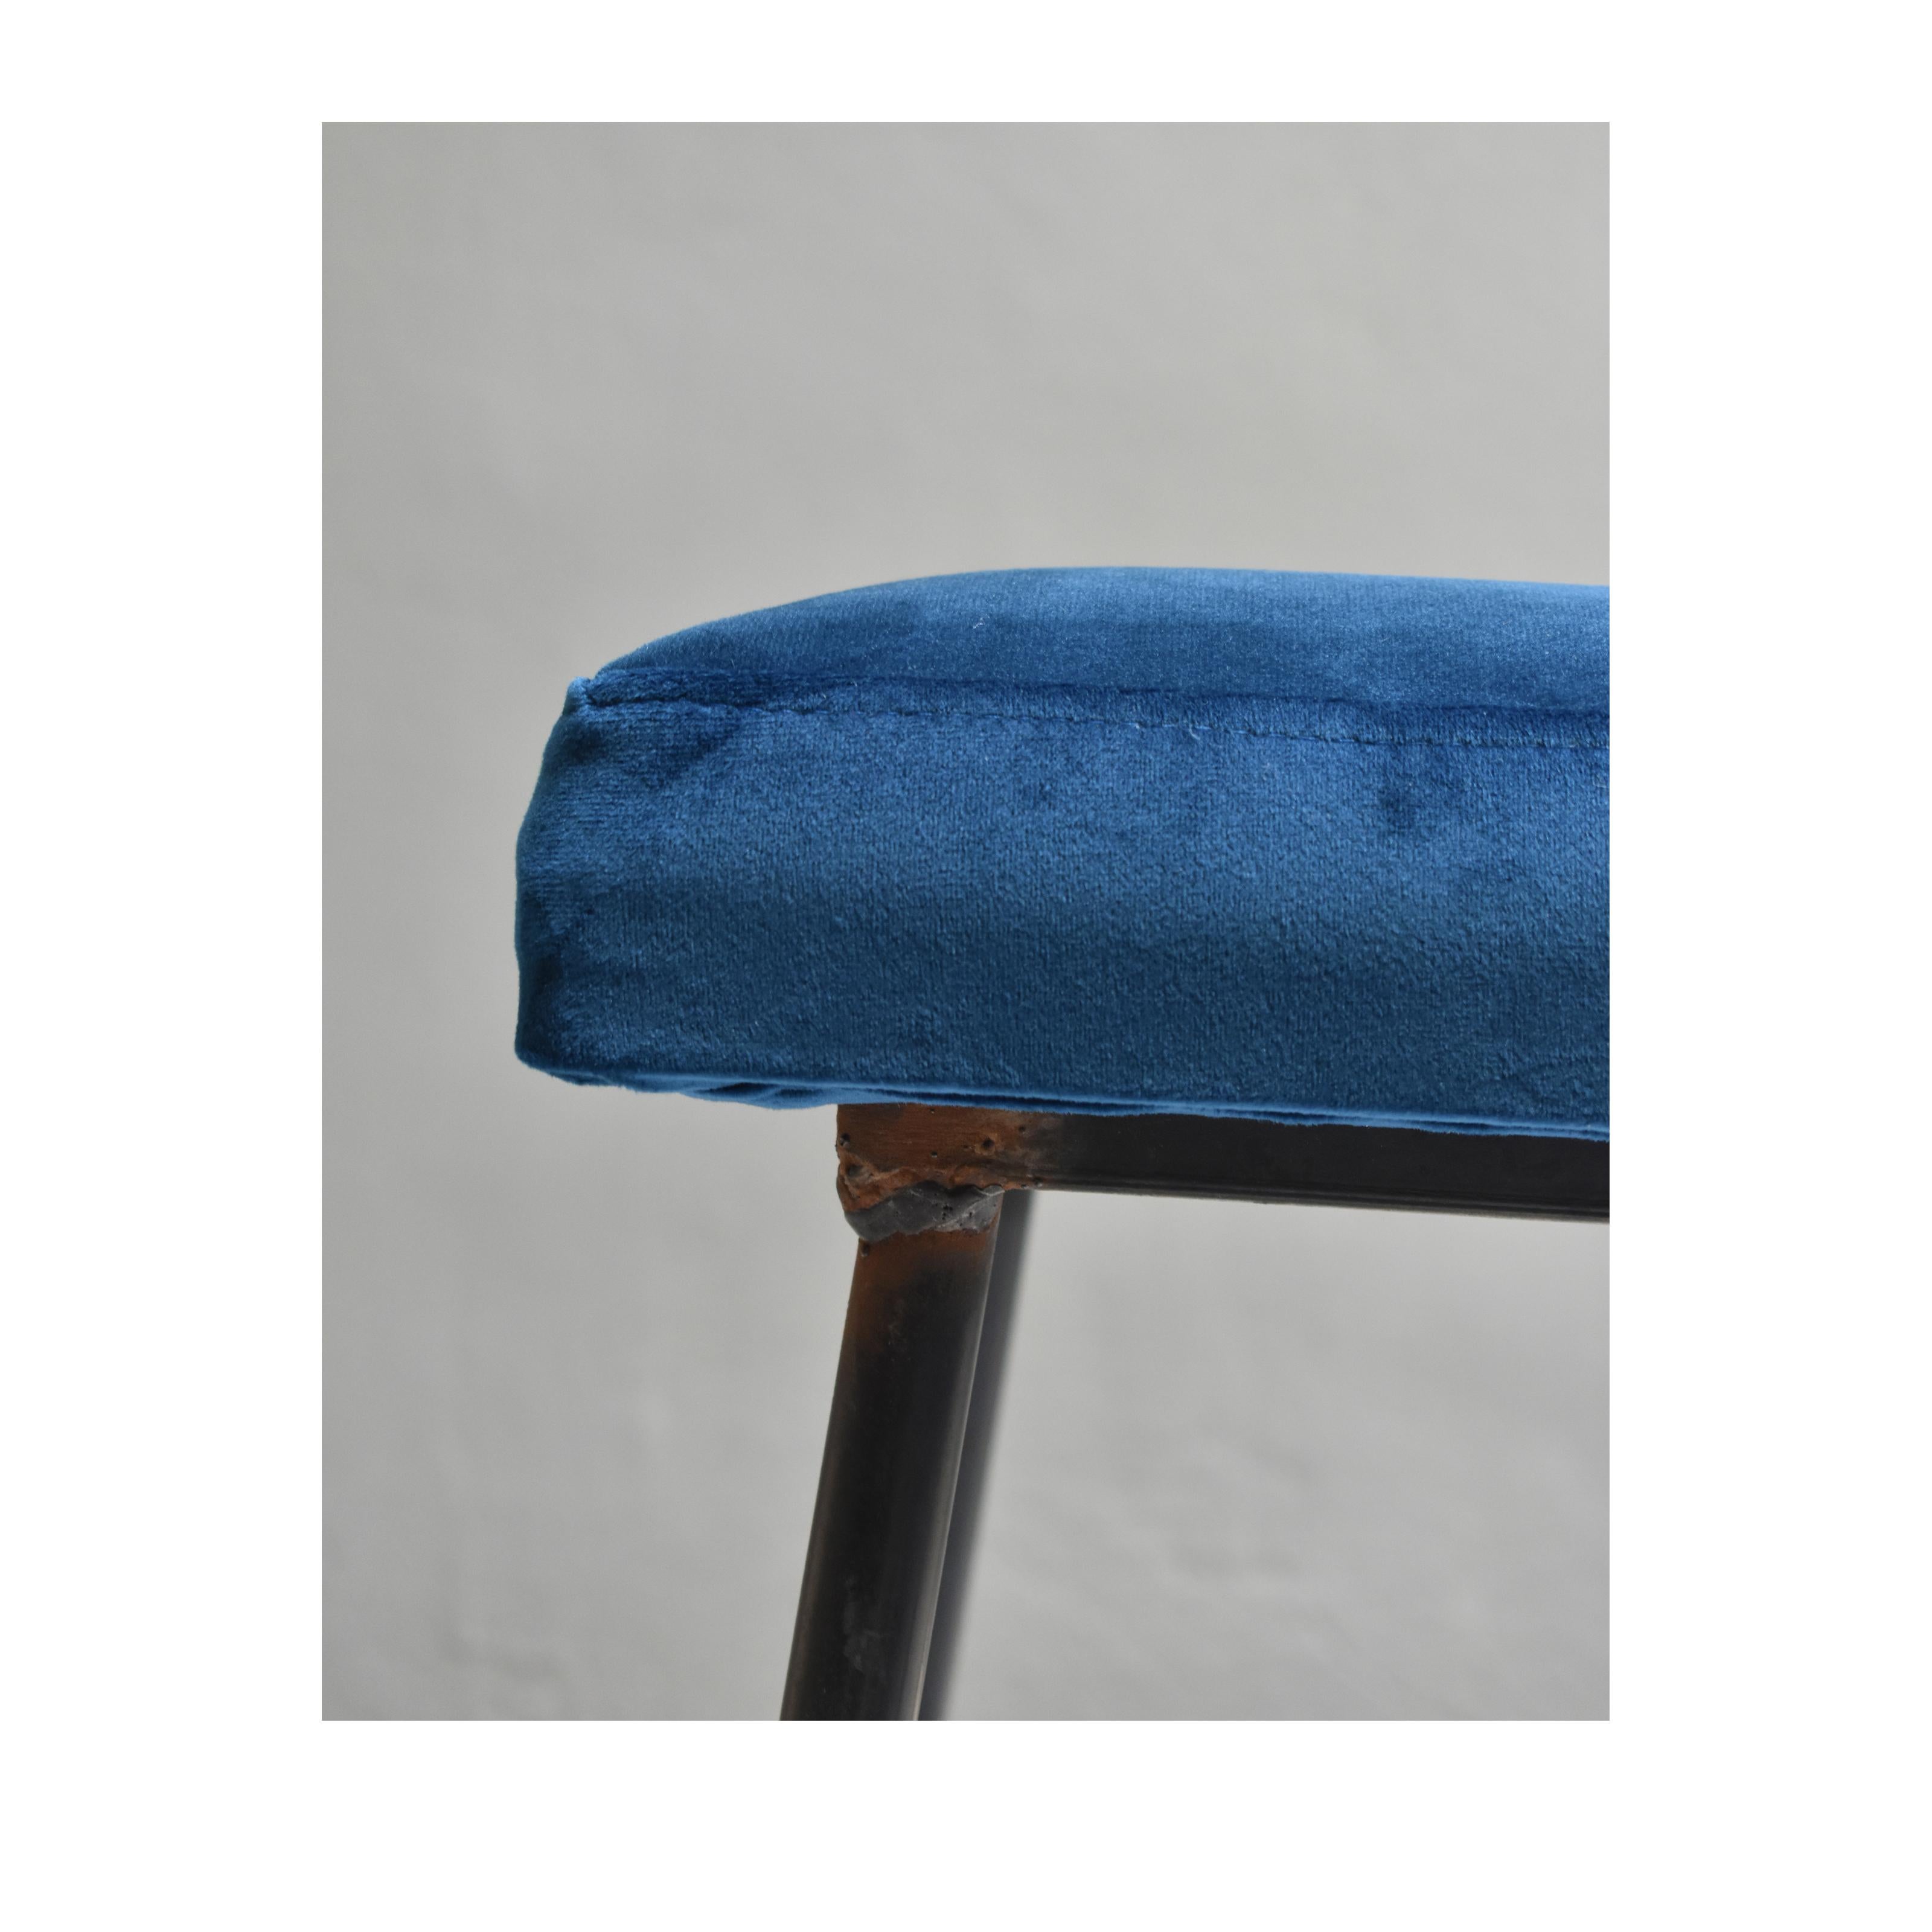 Set of Two Poufs 60s Stools, Brass Feet and Petroleum Blue Velvet Upholstery For Sale 2